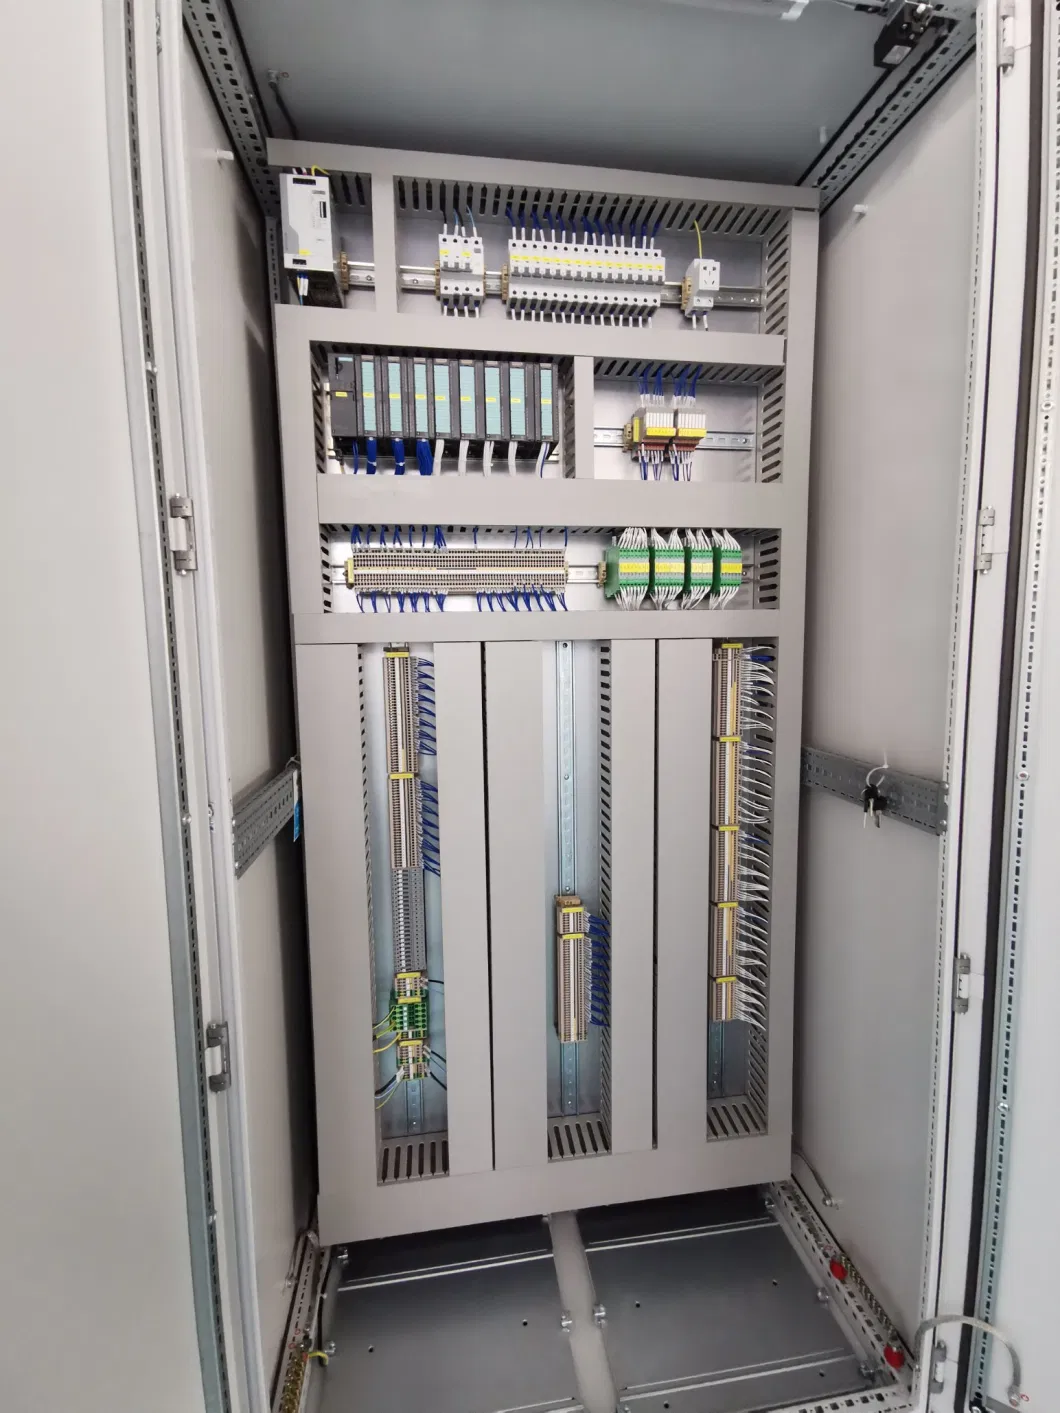 Intelligent Control Type 3 Siemens Profinet Discrete Safety PLC2 Control Cabinet